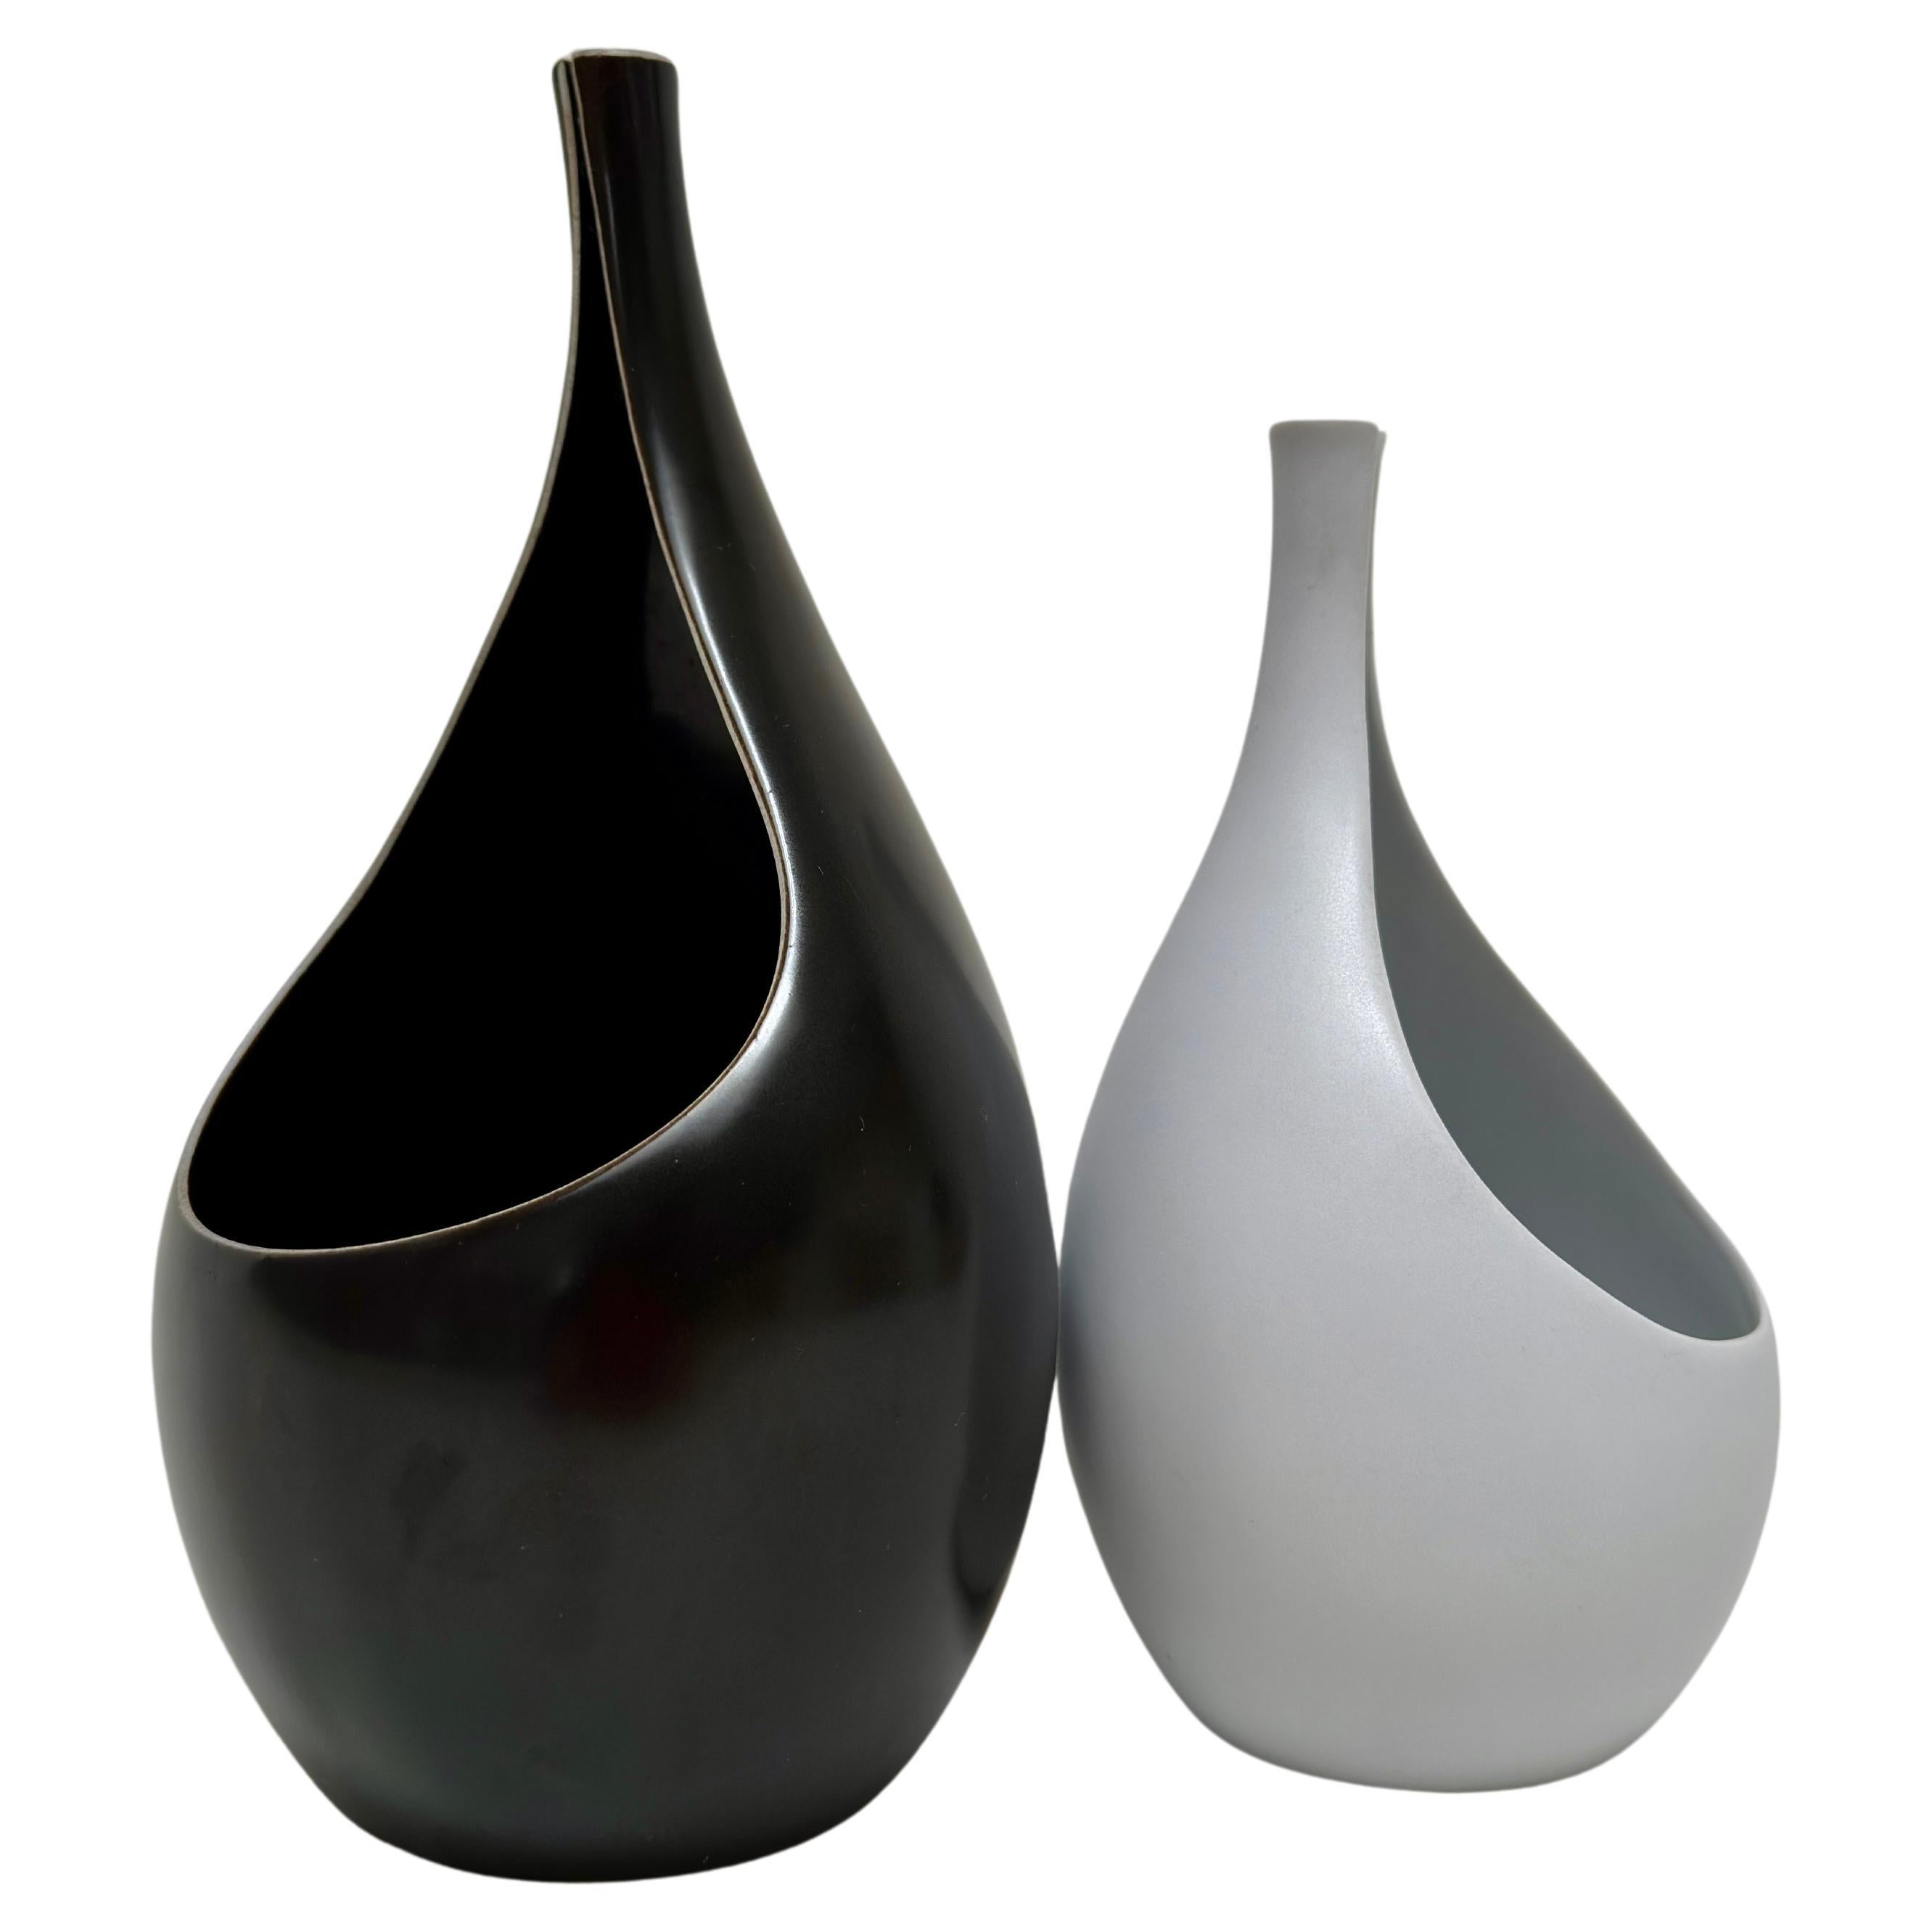 2 Pungo Vases, Stig Lindberg, Gustavsberg c. 1960 For Sale 1